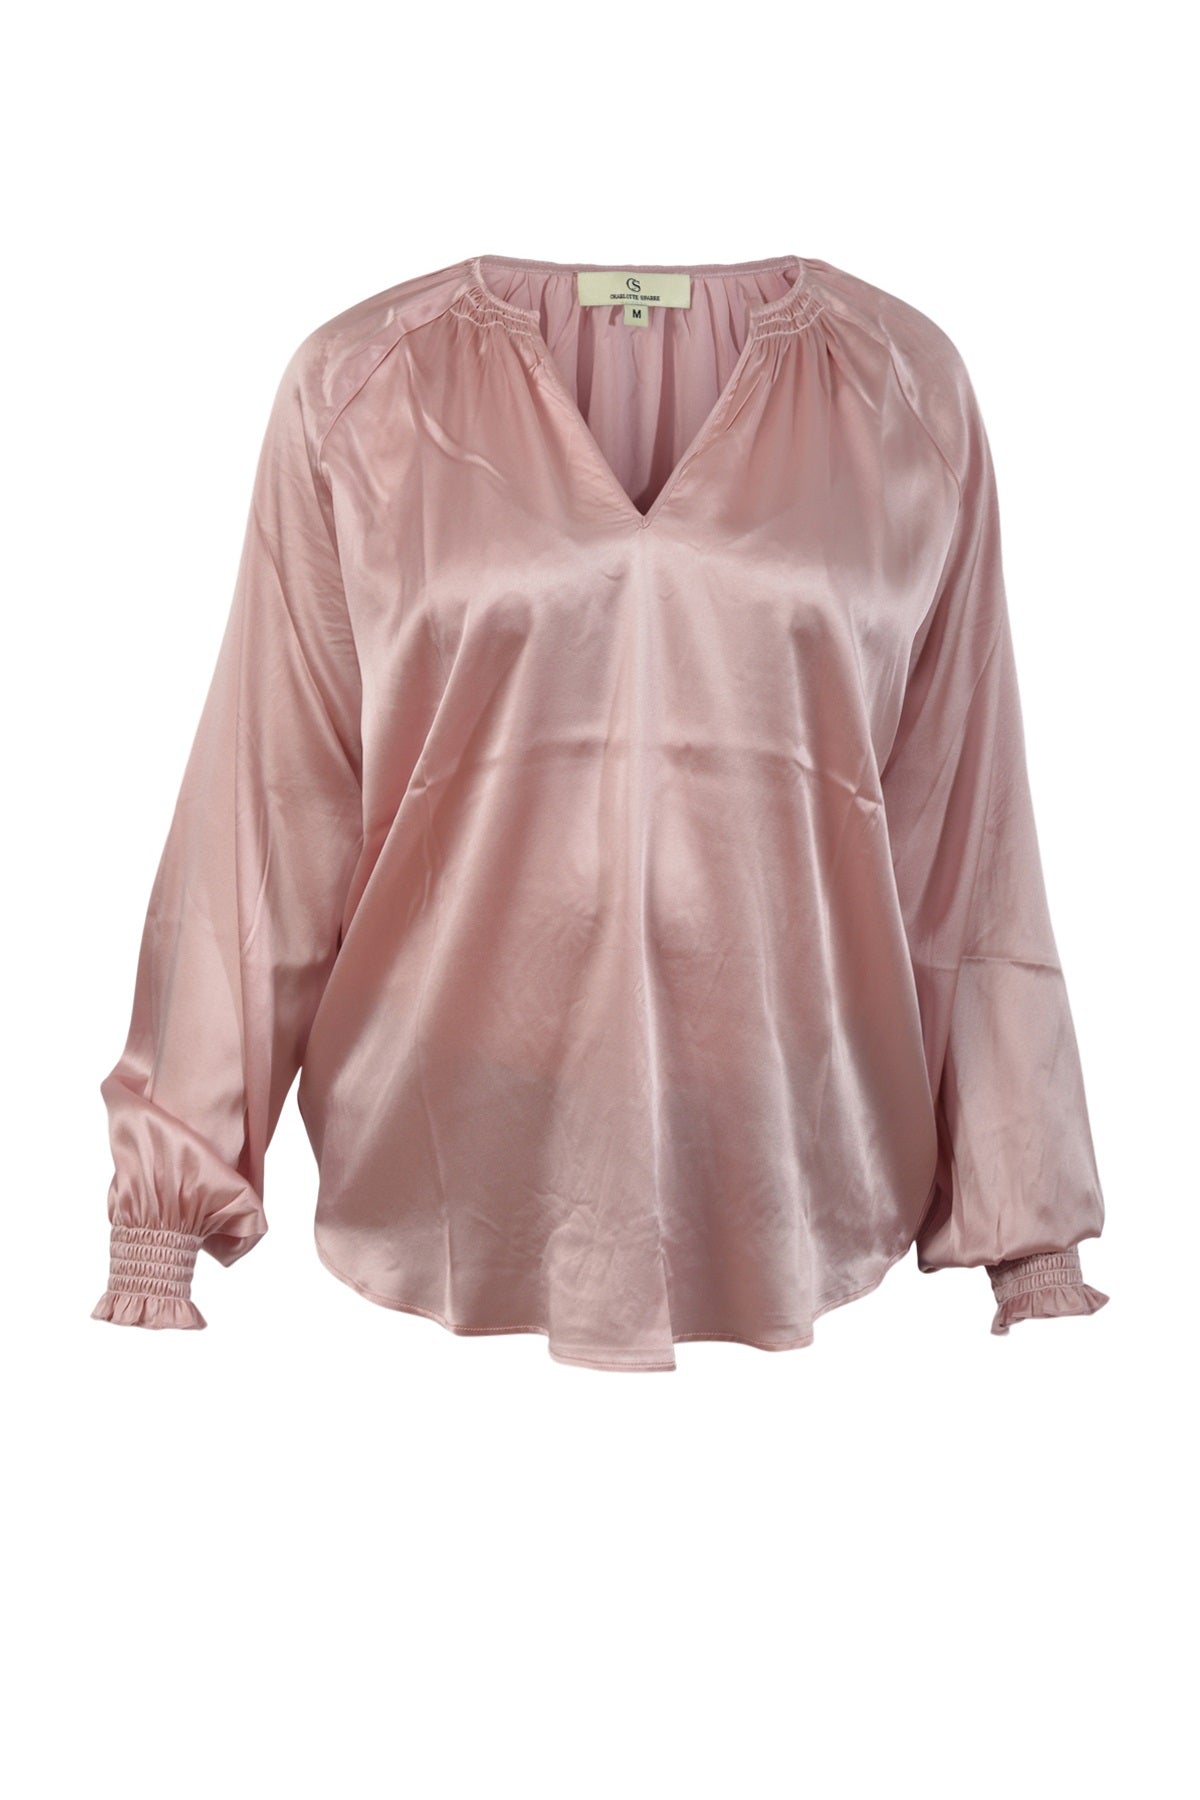 Charlotte Sparre Want med blouse 2801, Solid Rose